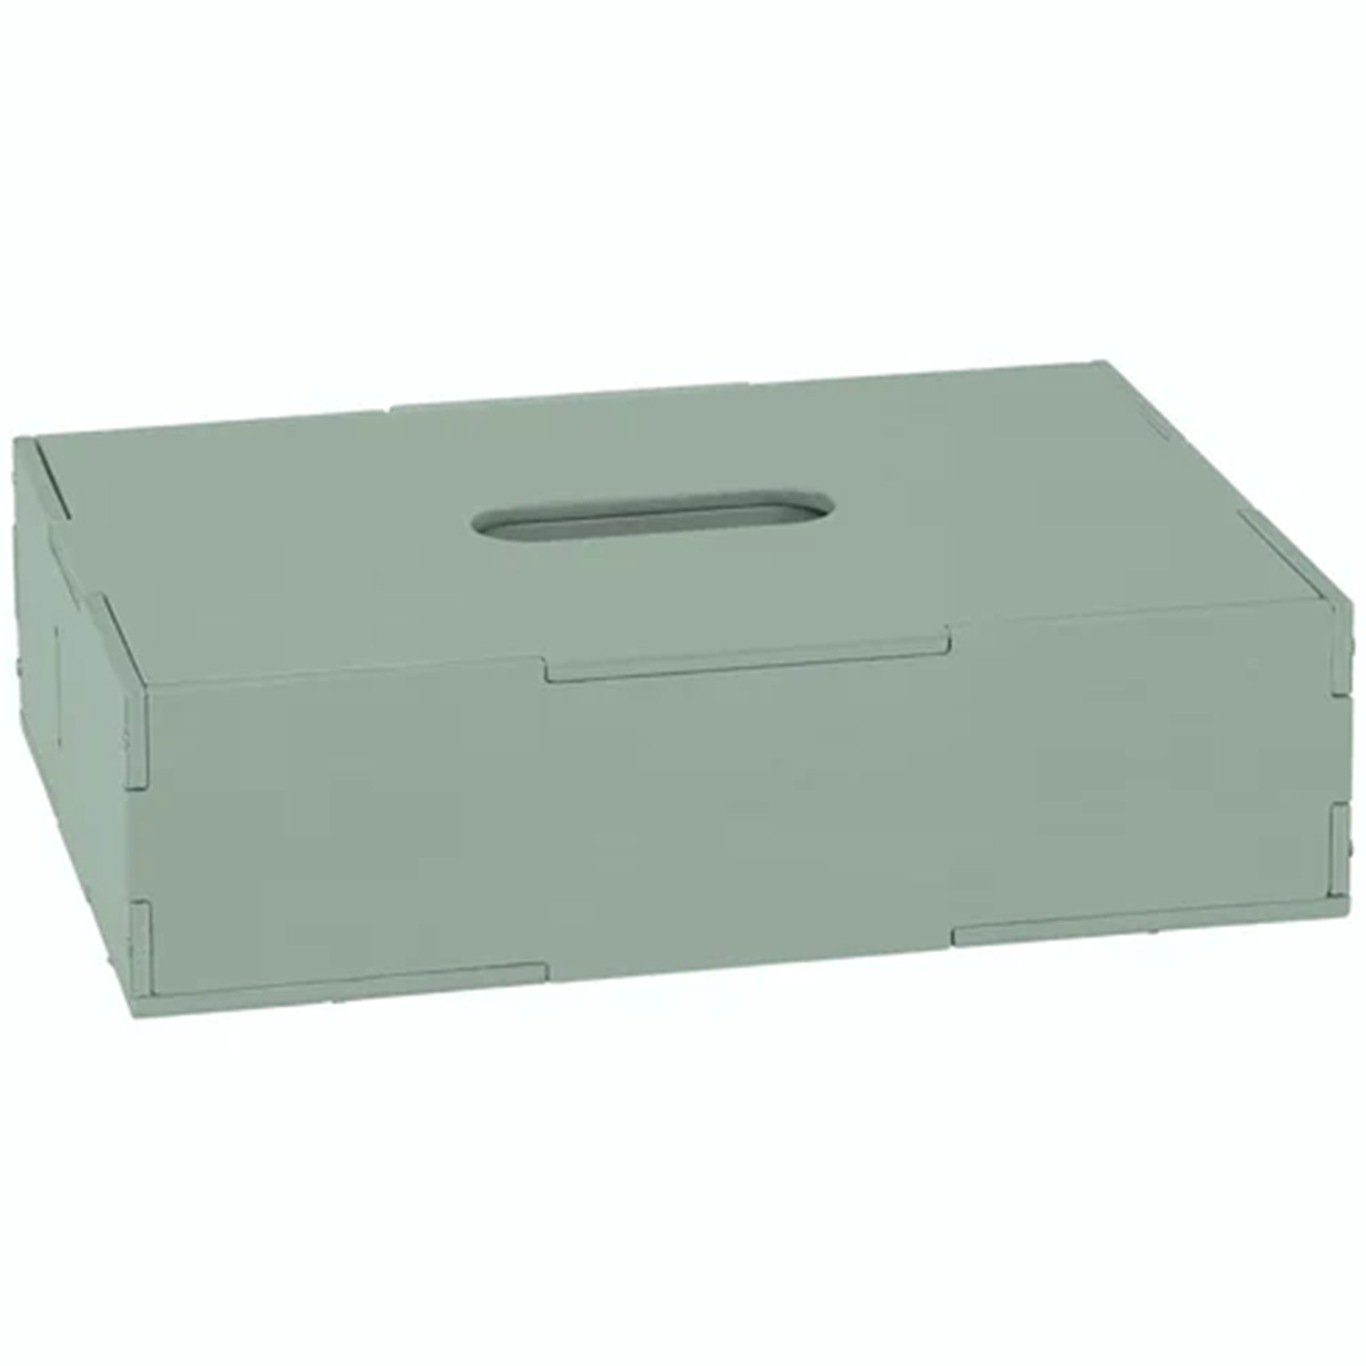 Kiddo Storage Box 24x33.5 cm, Olive Green